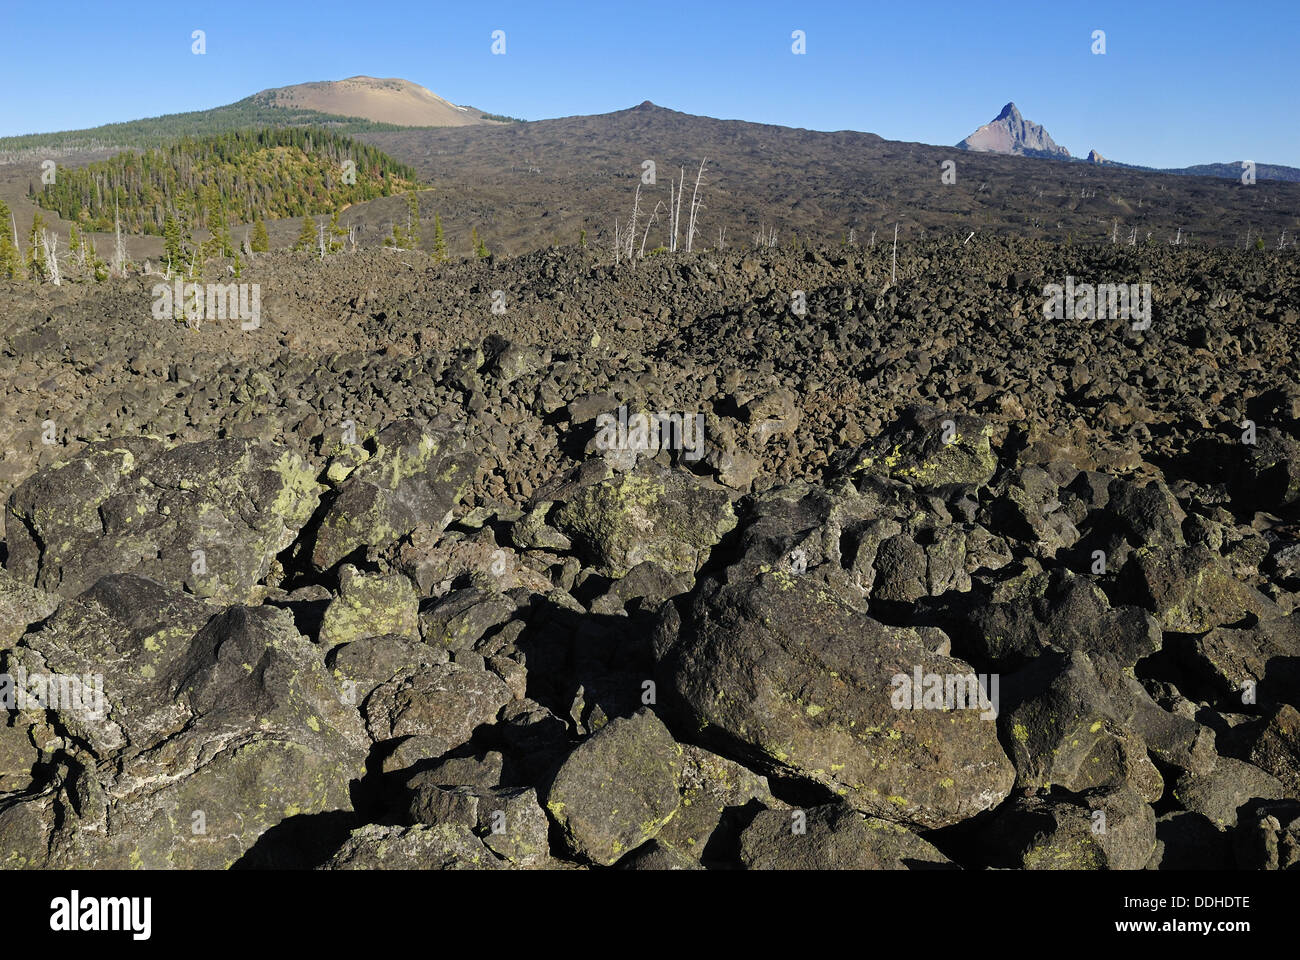 Lava landscape with Mount Washington volcanoe and Belknap Crater, McKenzie Pass, Cascade Range, Oregon, USA Stock Photo